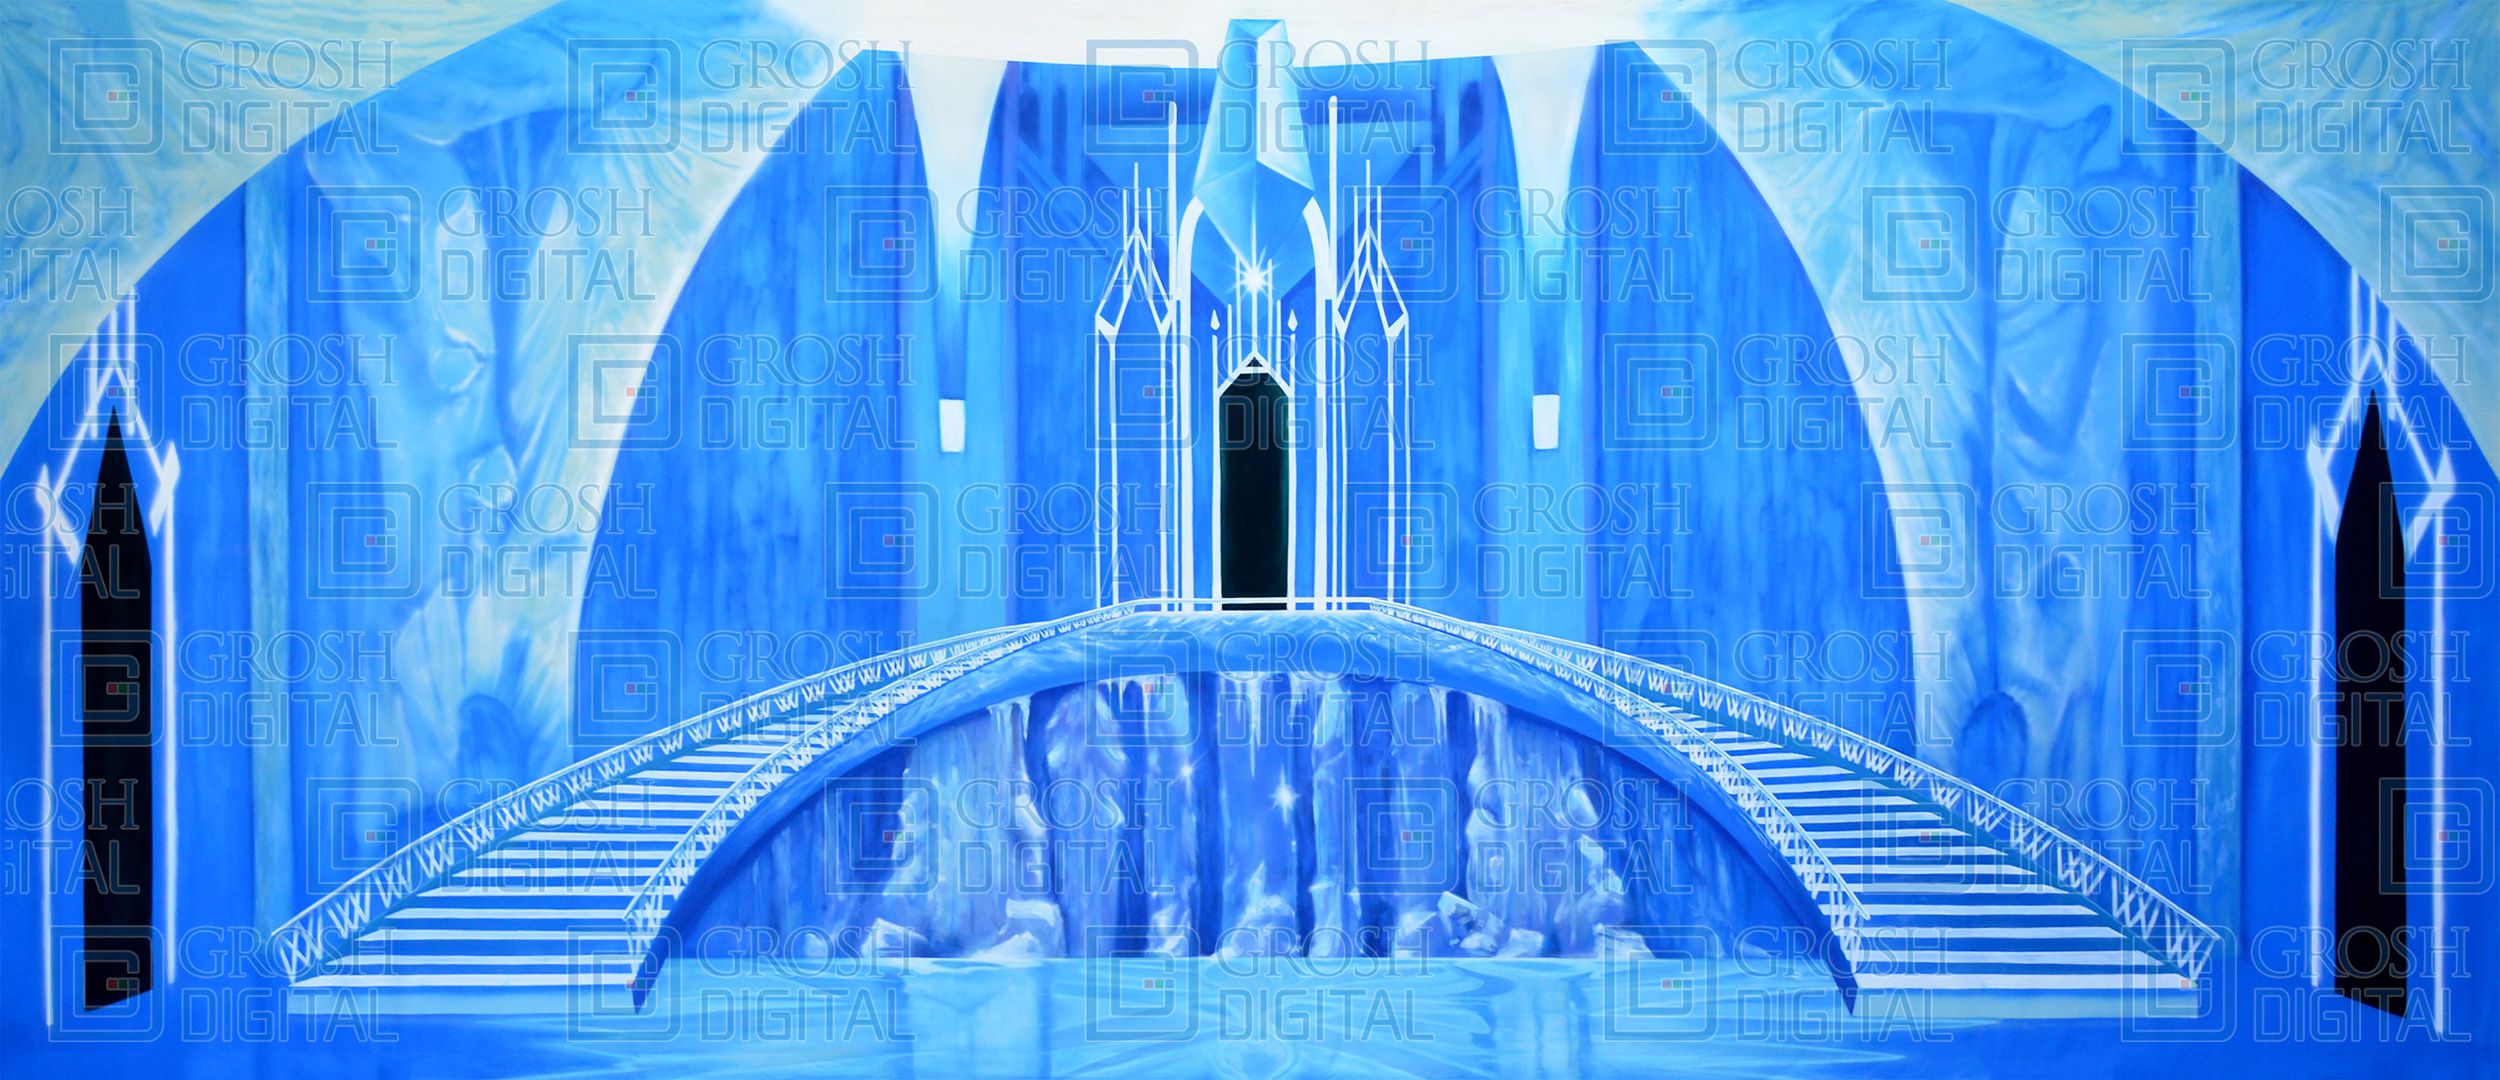 Ice Castle Interior Projected Backdrops Grosh Digital Castles